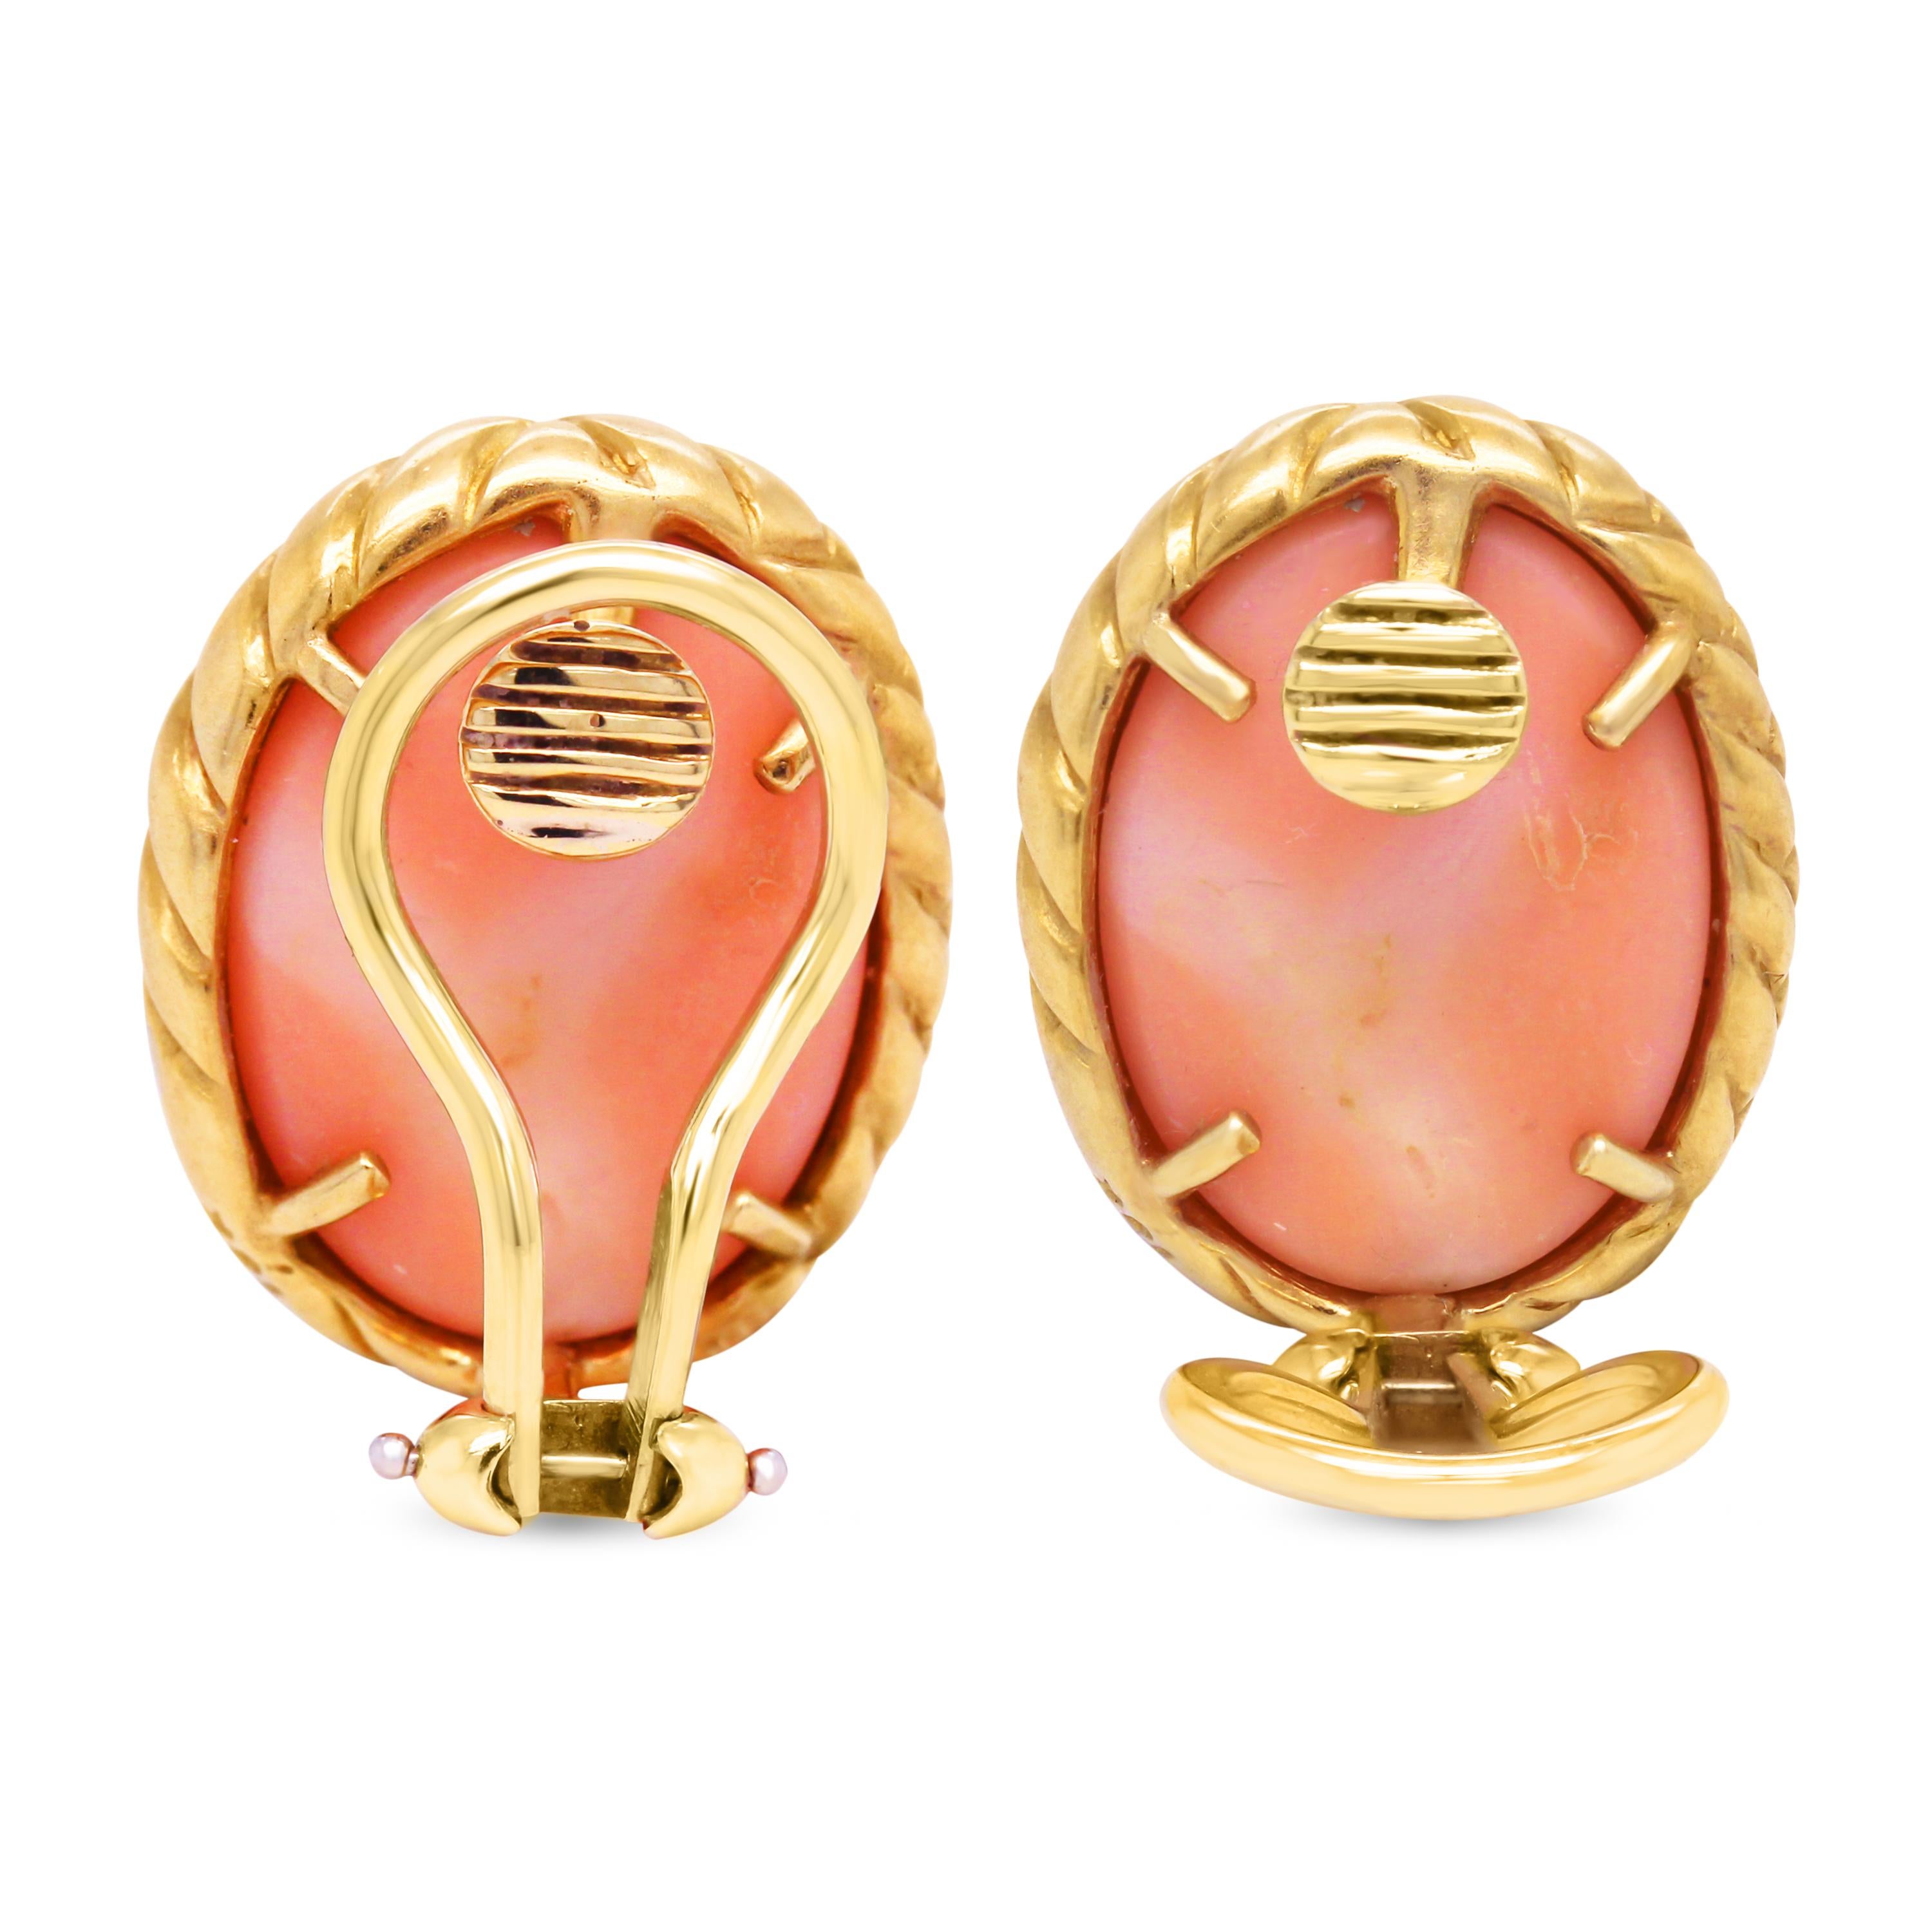 Contemporary Tiffany & Co. 18 Karat Yellow Gold Pink Peruvian Opal Earrings, Circa 1982